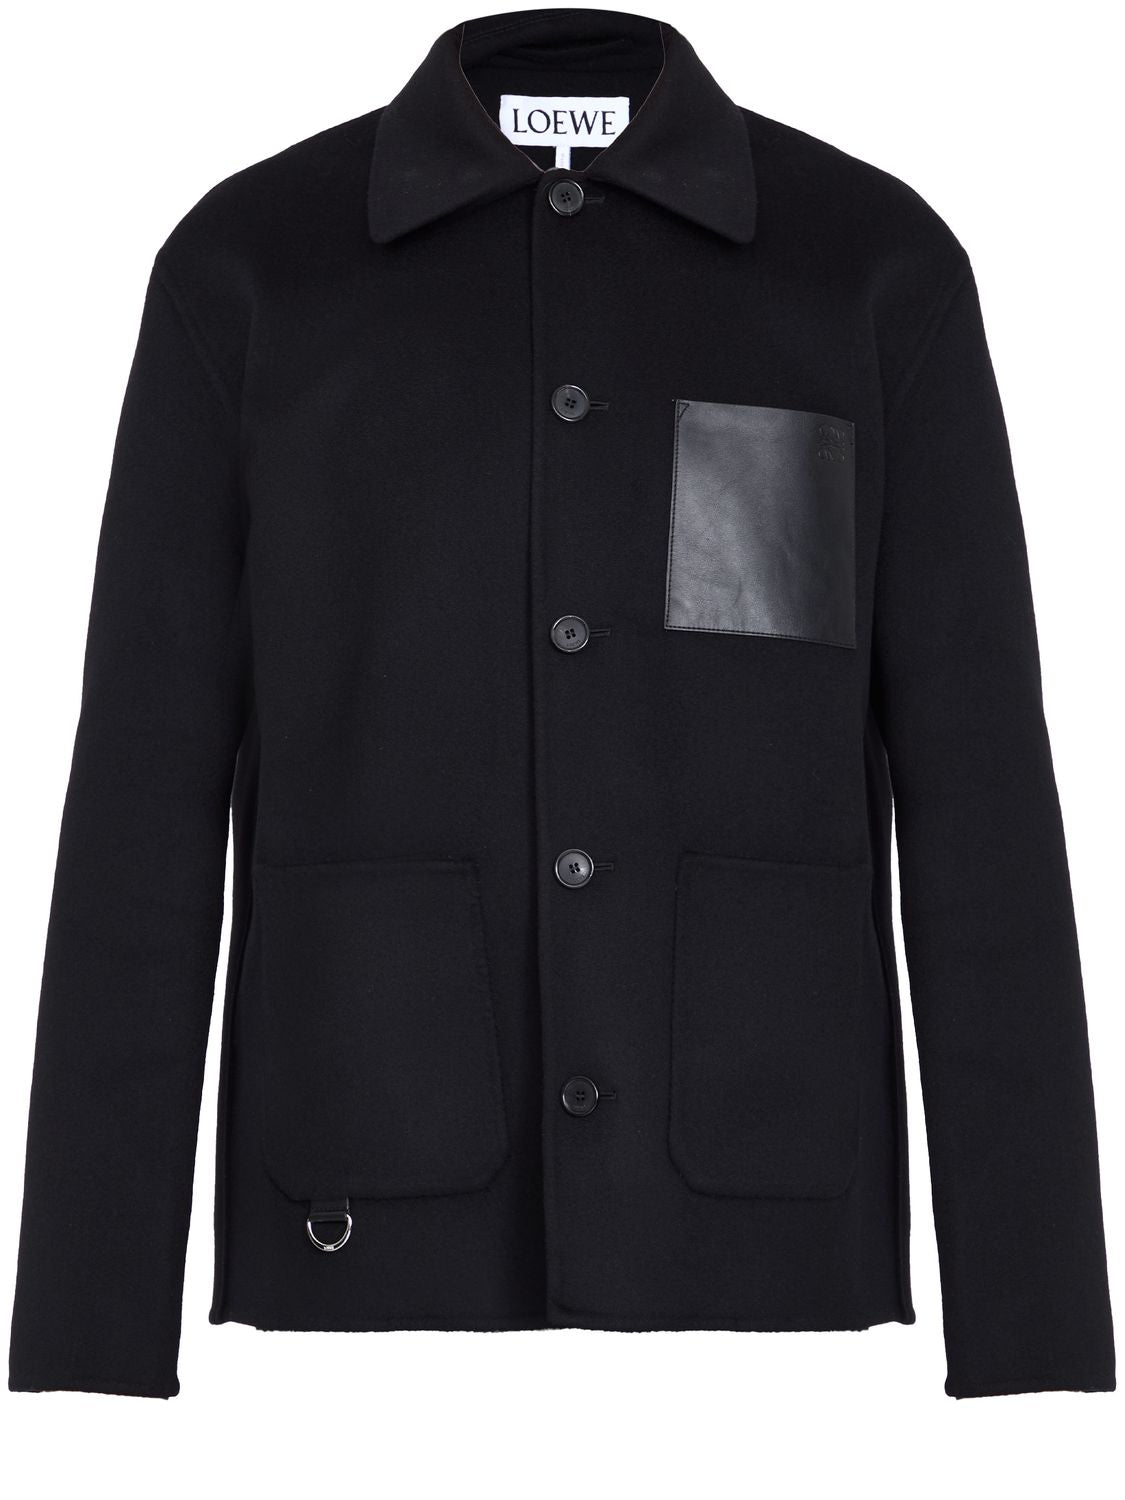 Shop Loewe Sophisticated Black Workwear Jacket For Men